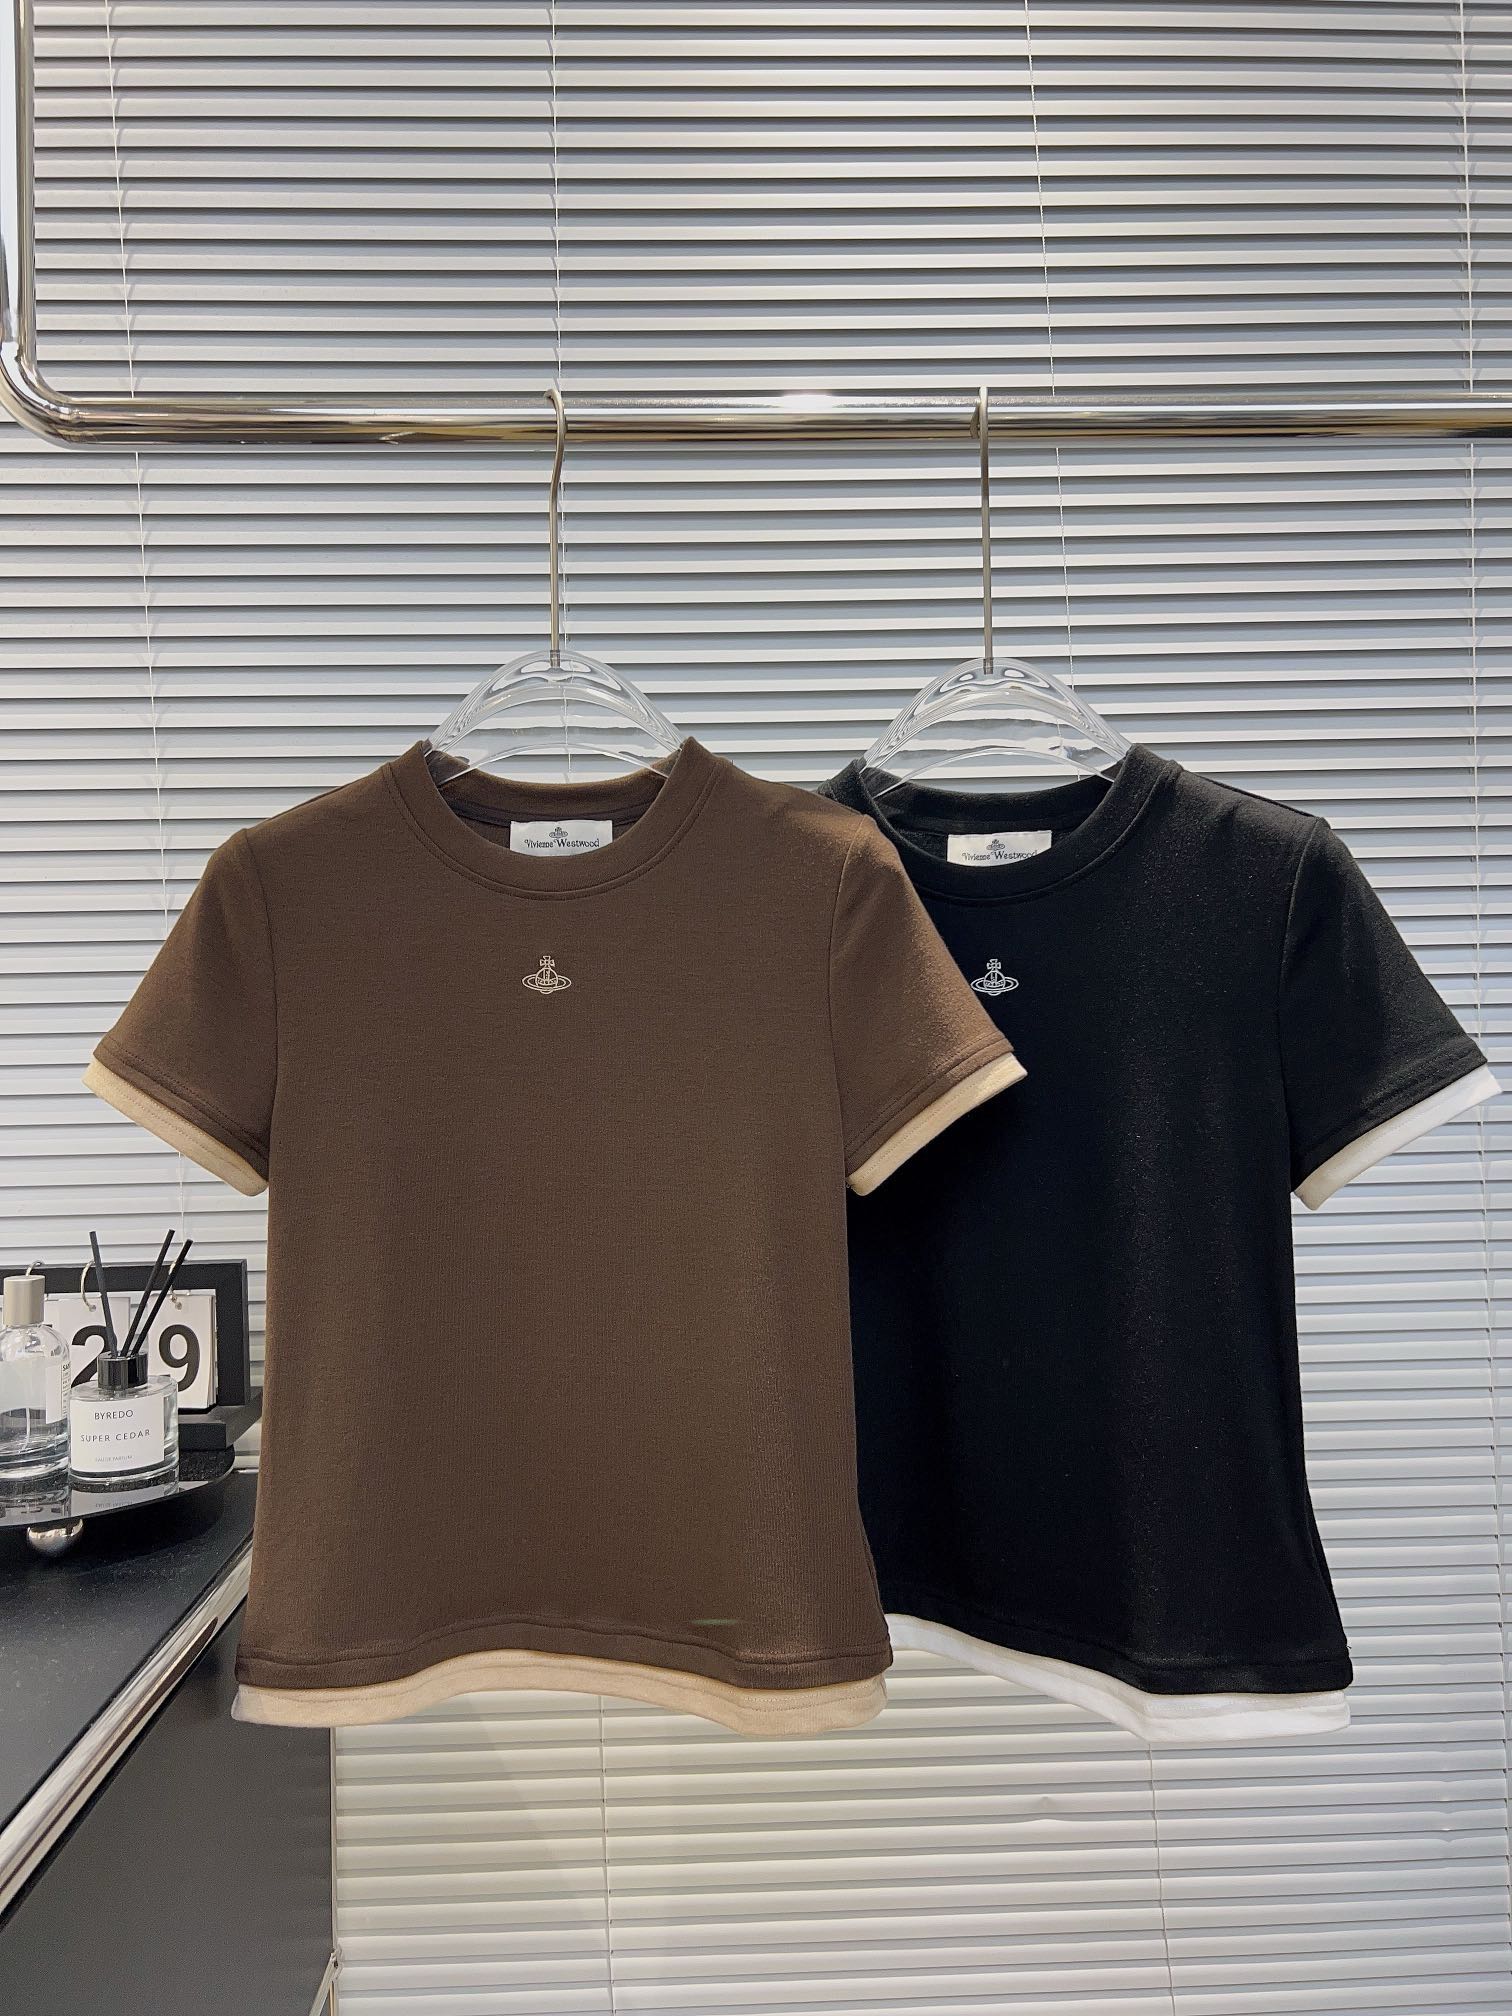 Vivienne Westwood Clothing T-Shirt Black Splicing Cotton Short Sleeve